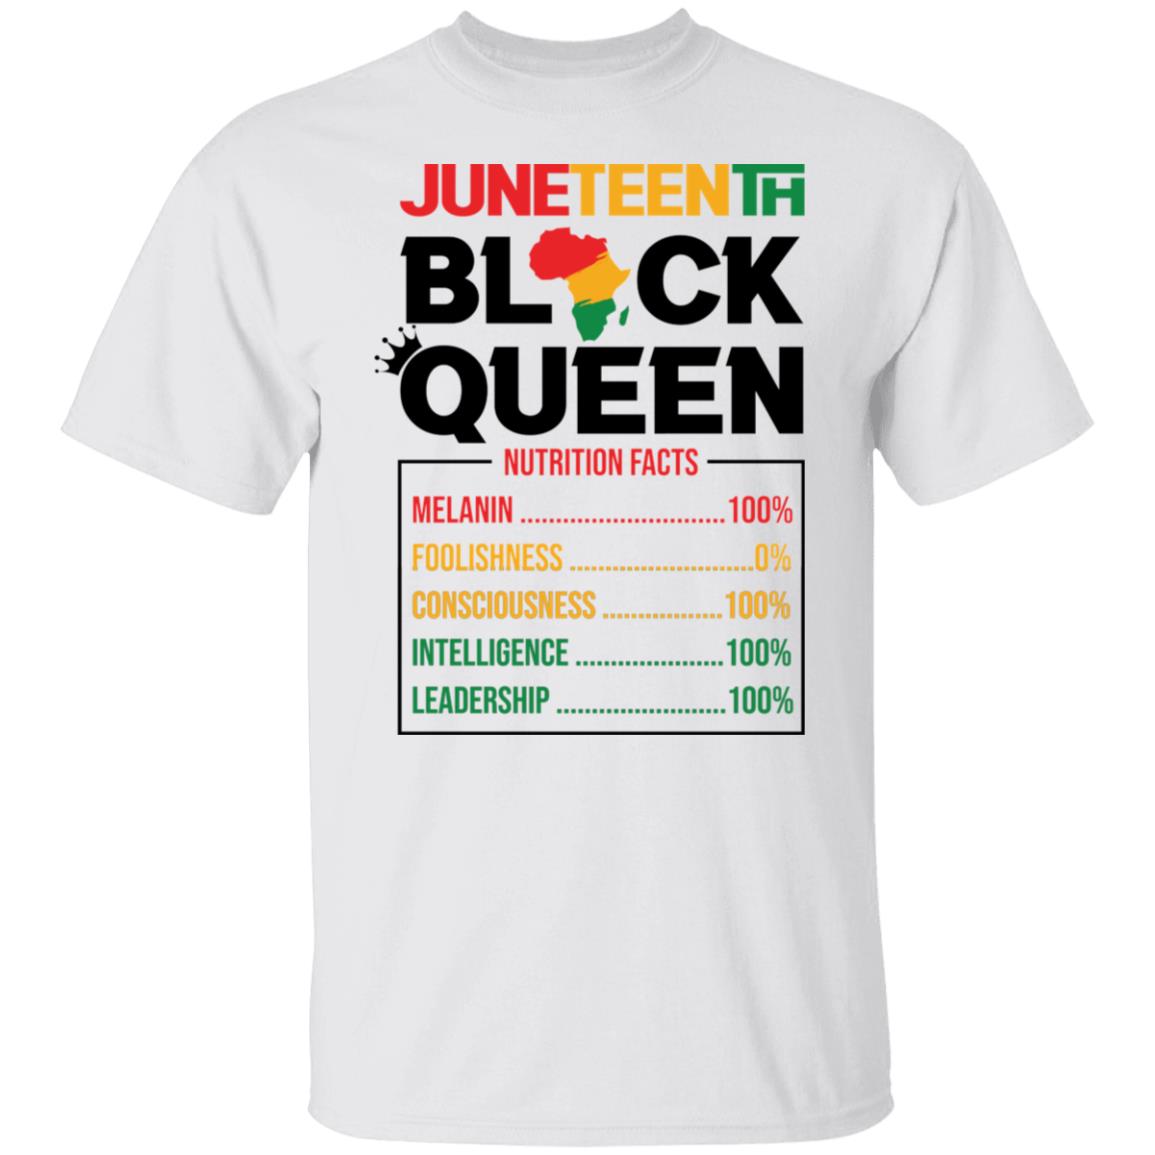 Juneteenth Black Queen Nutrition Facts T-shirt Apparel Gearment Unisex Tee White S